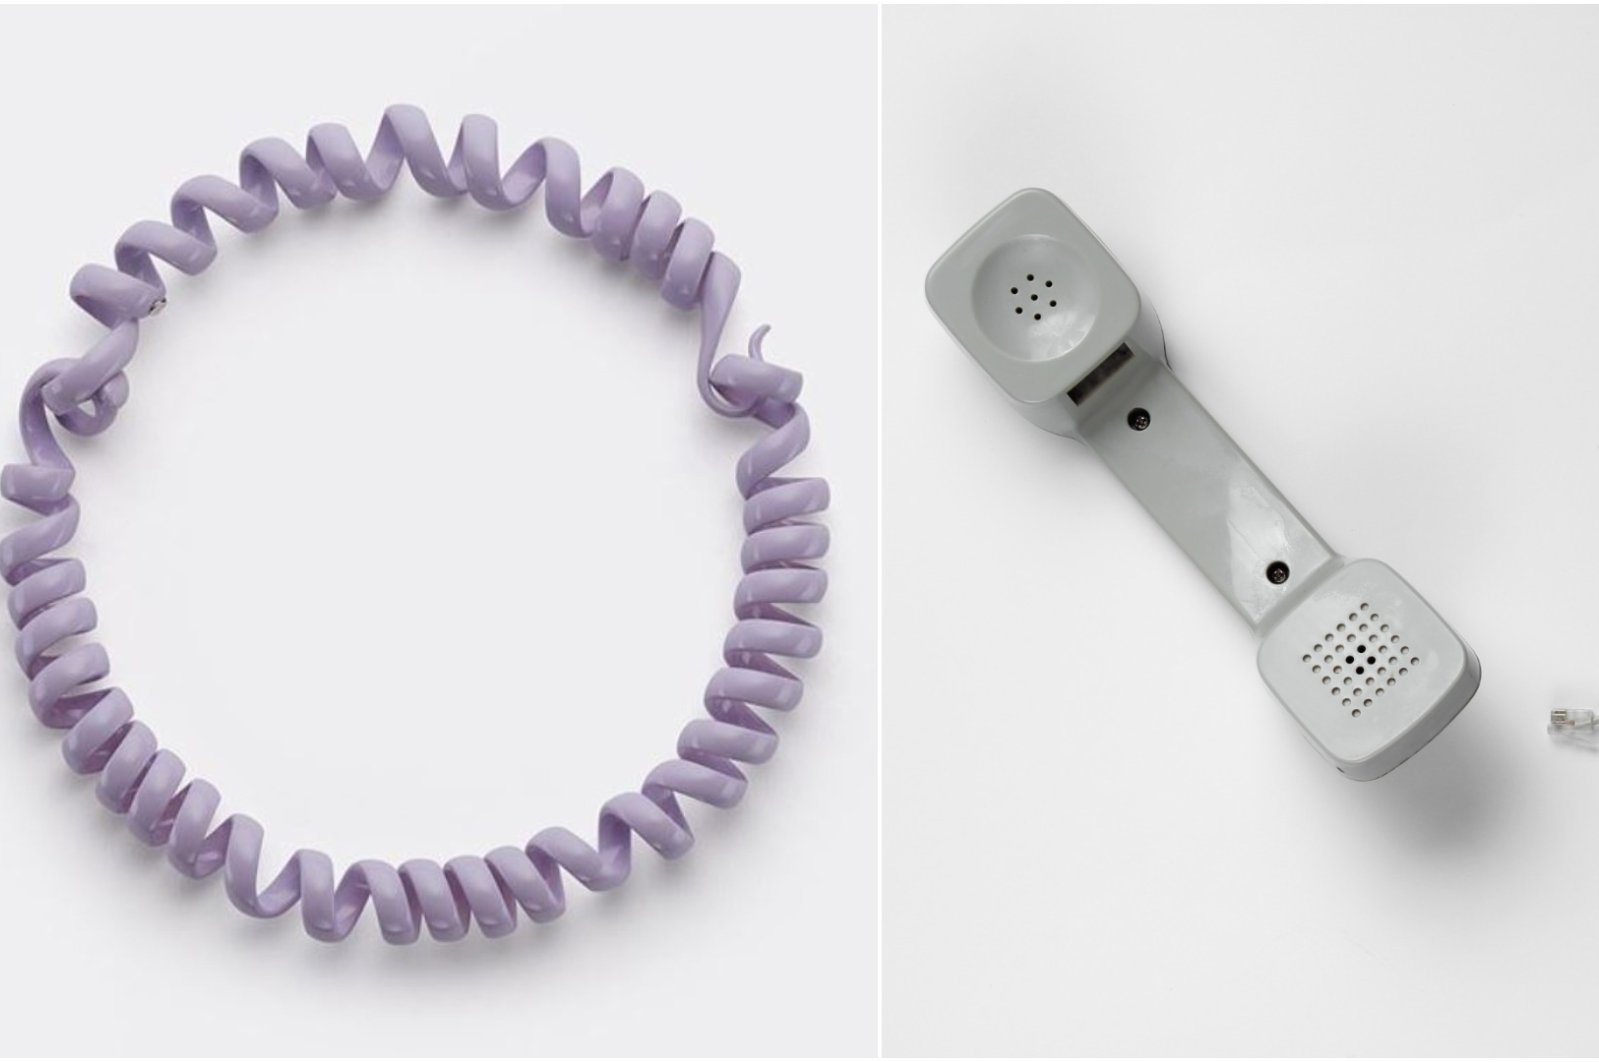 Bottega Veneta's latest jewelry collection has been criticized for mimicking phone cords. (Bottega Veneta/Shutterstock Photos)